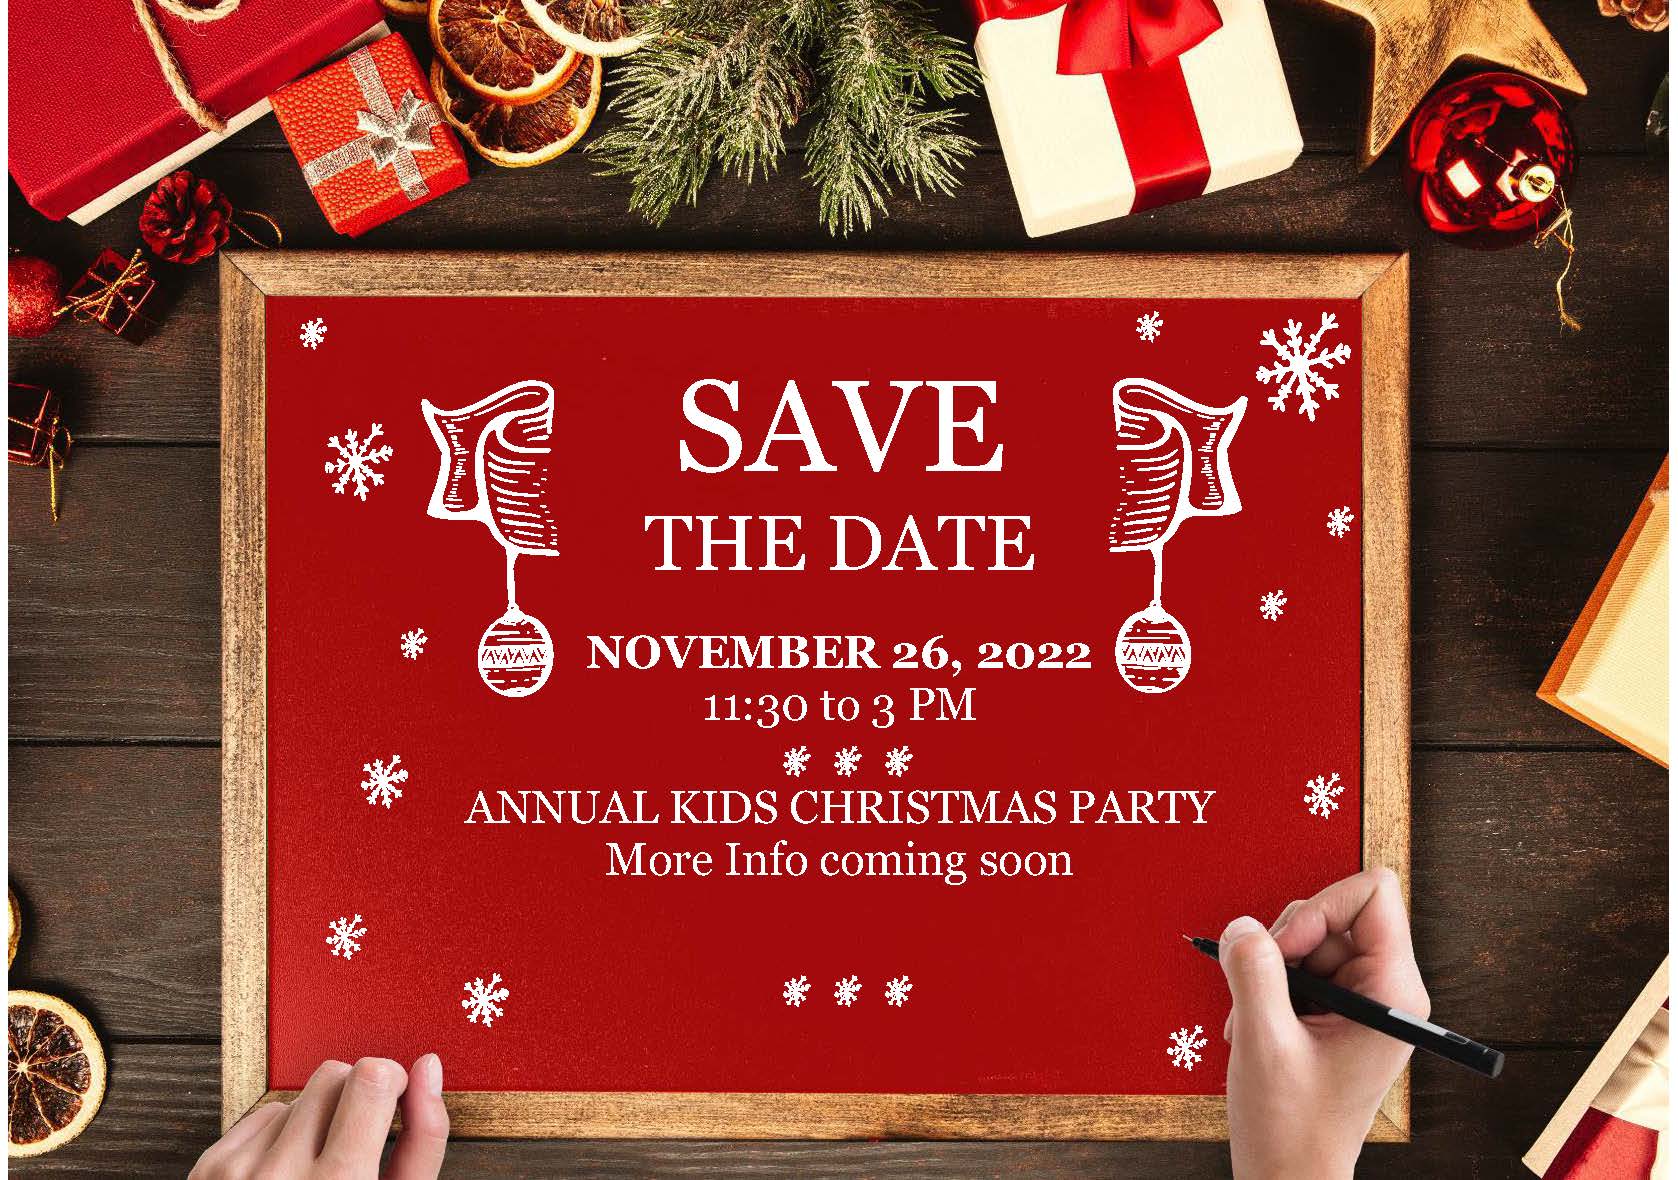 Annual Kids Christmas Party – November 26, 2022 @ TBD